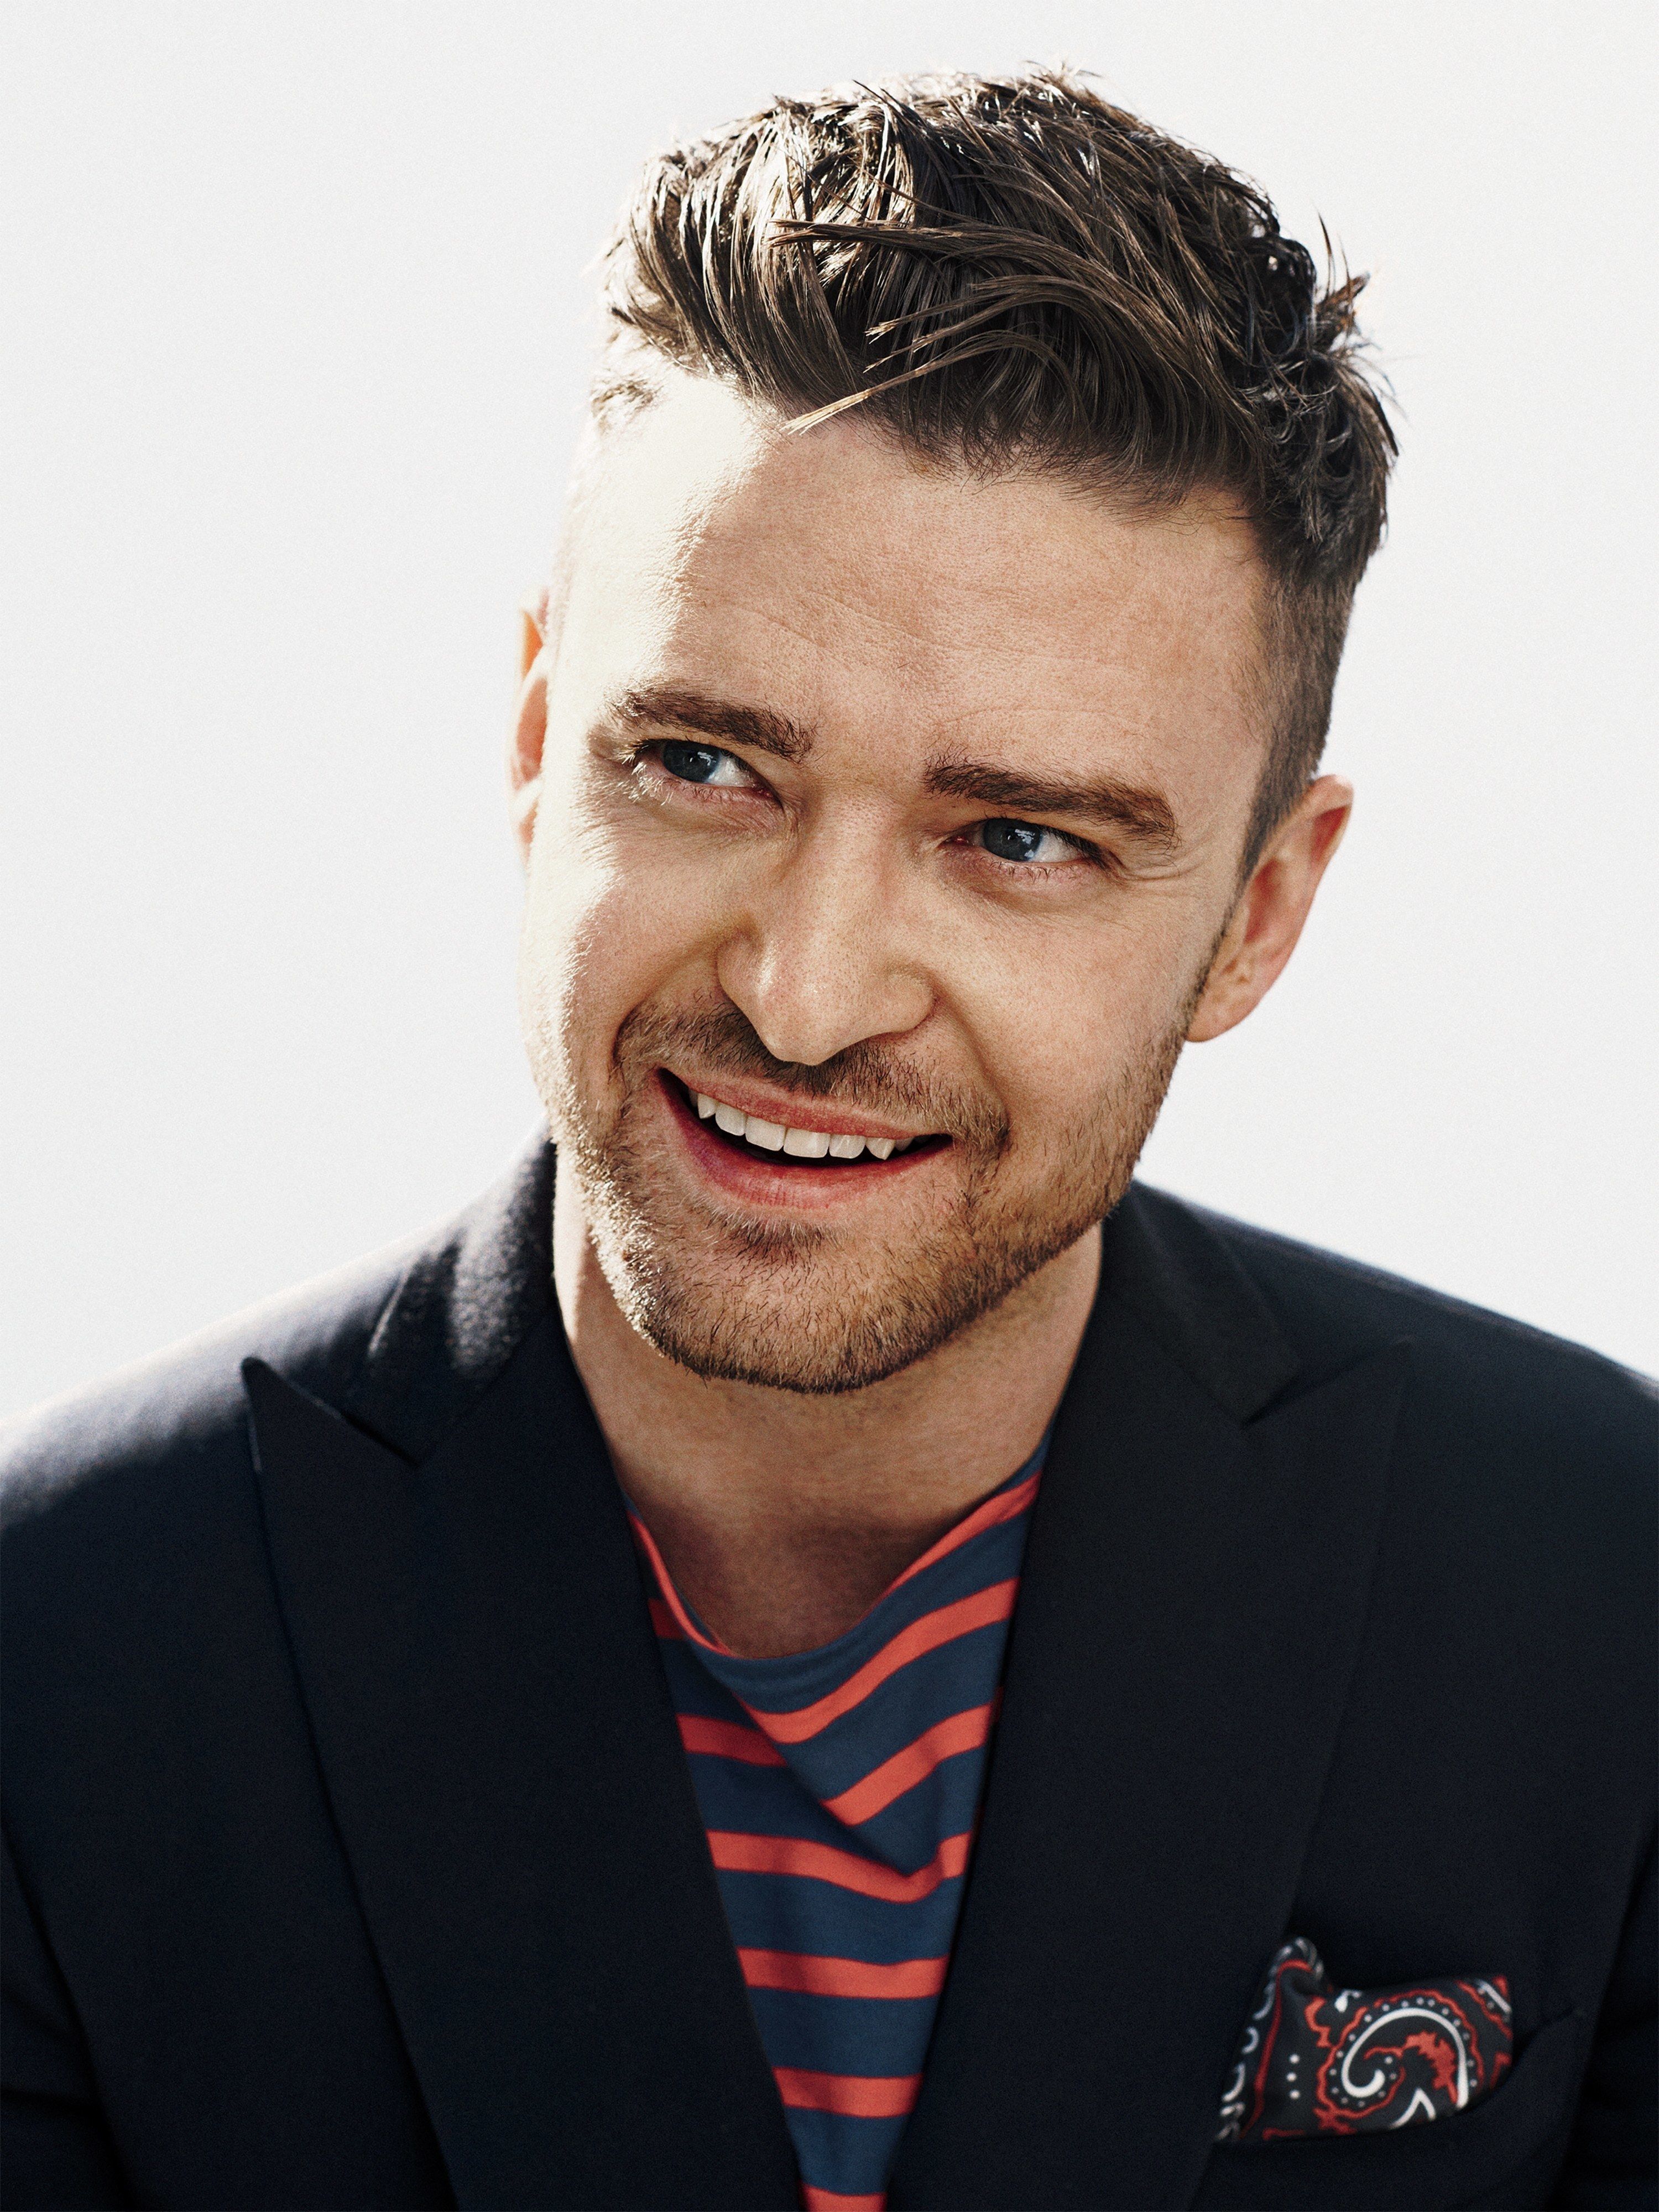 Justin Timberlake Men of the Year 2013 - #Hashtag